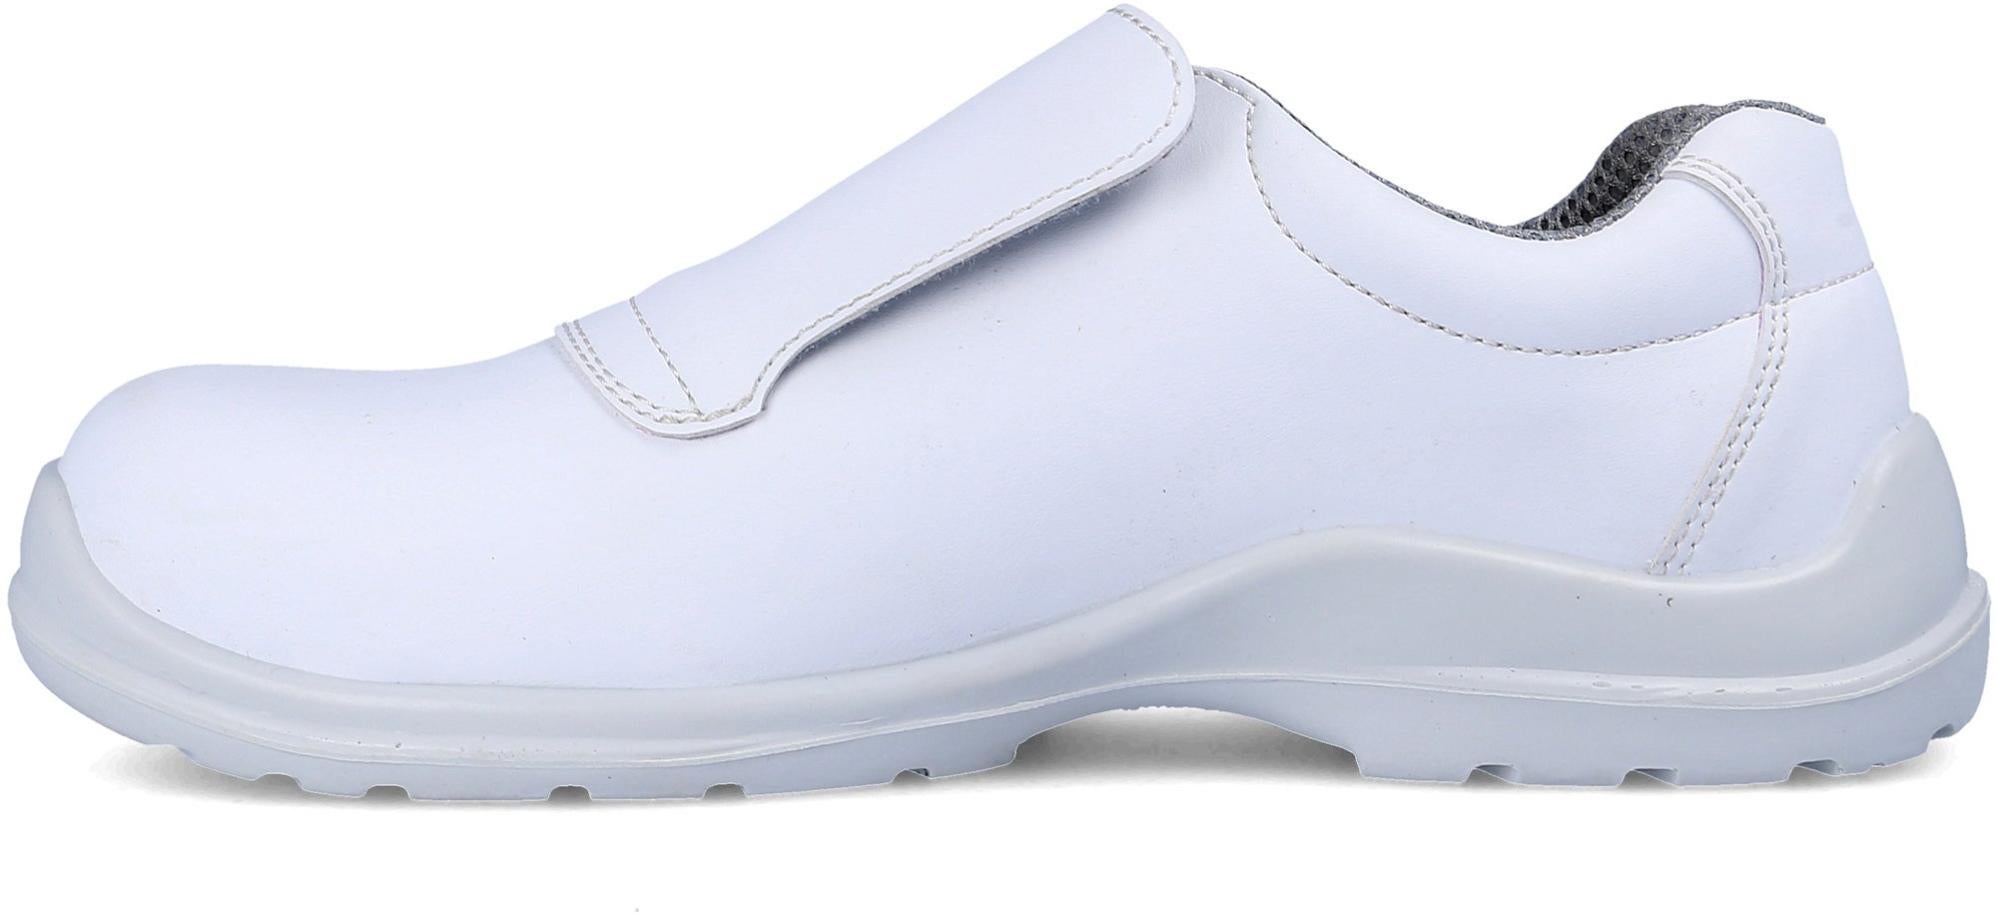 Zapato seguridad paredes, arzak microfibra blanco, talla 46